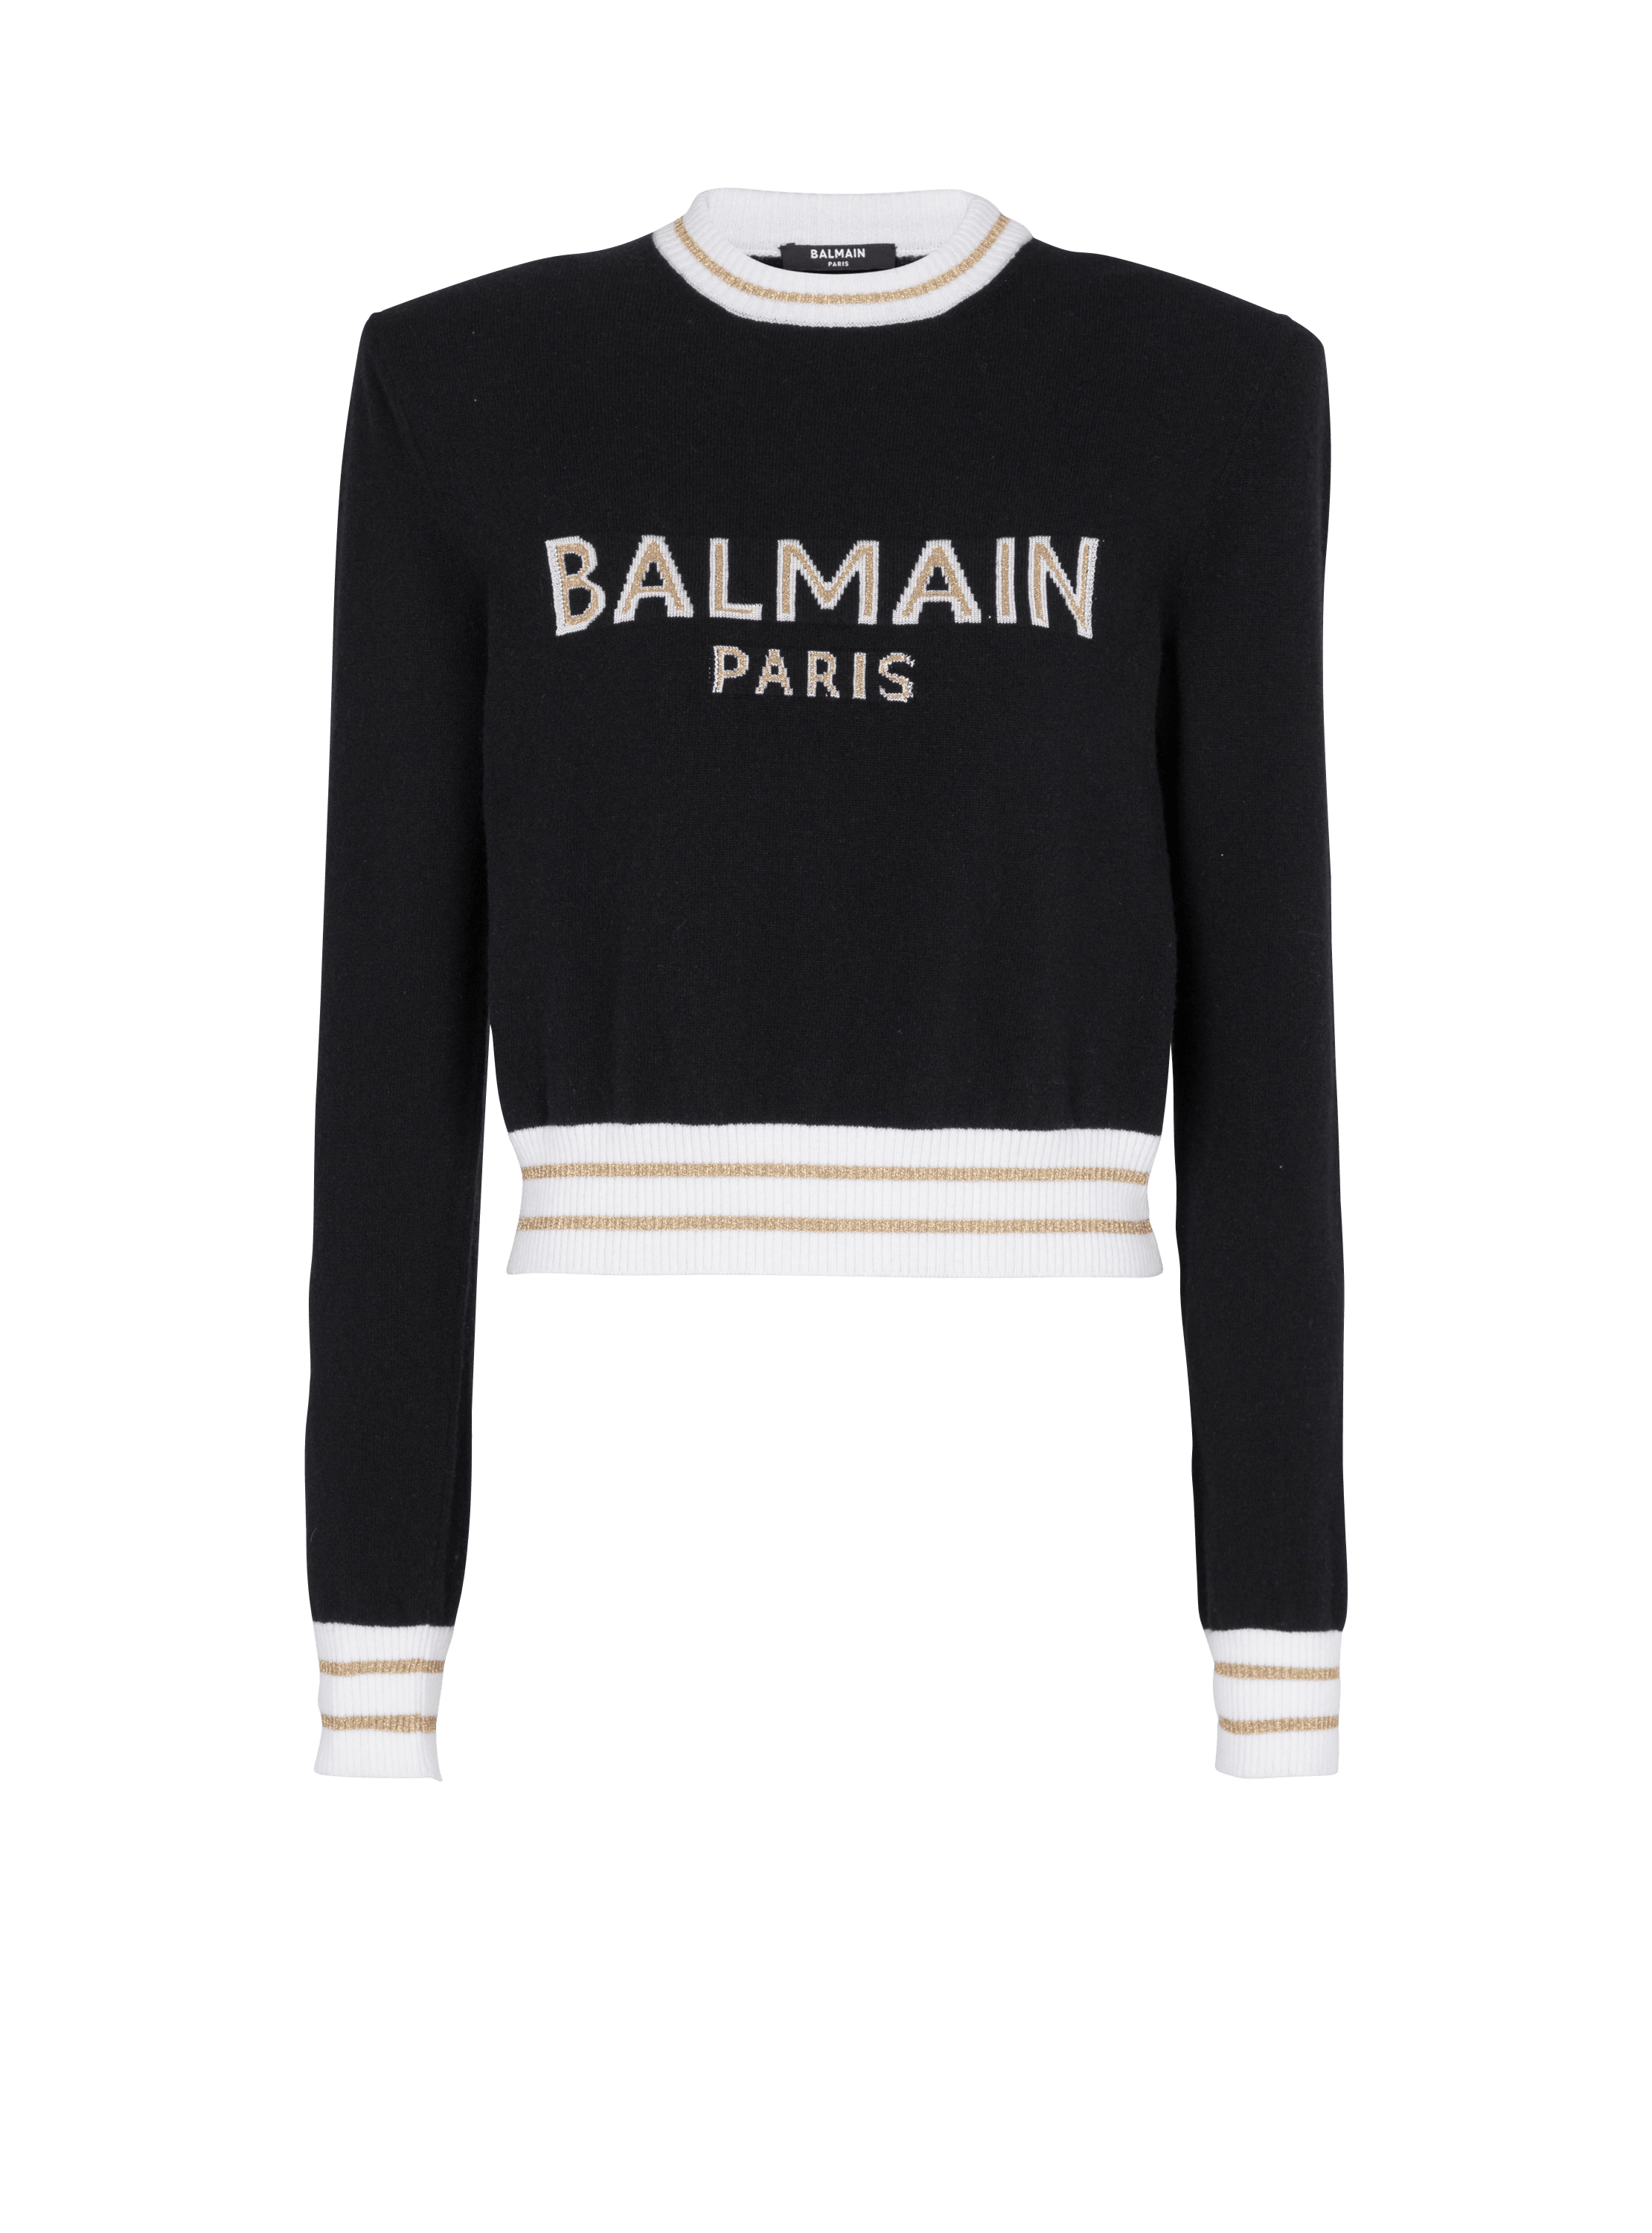 Cropped wool jumper with Balmain logo, black, hi-res